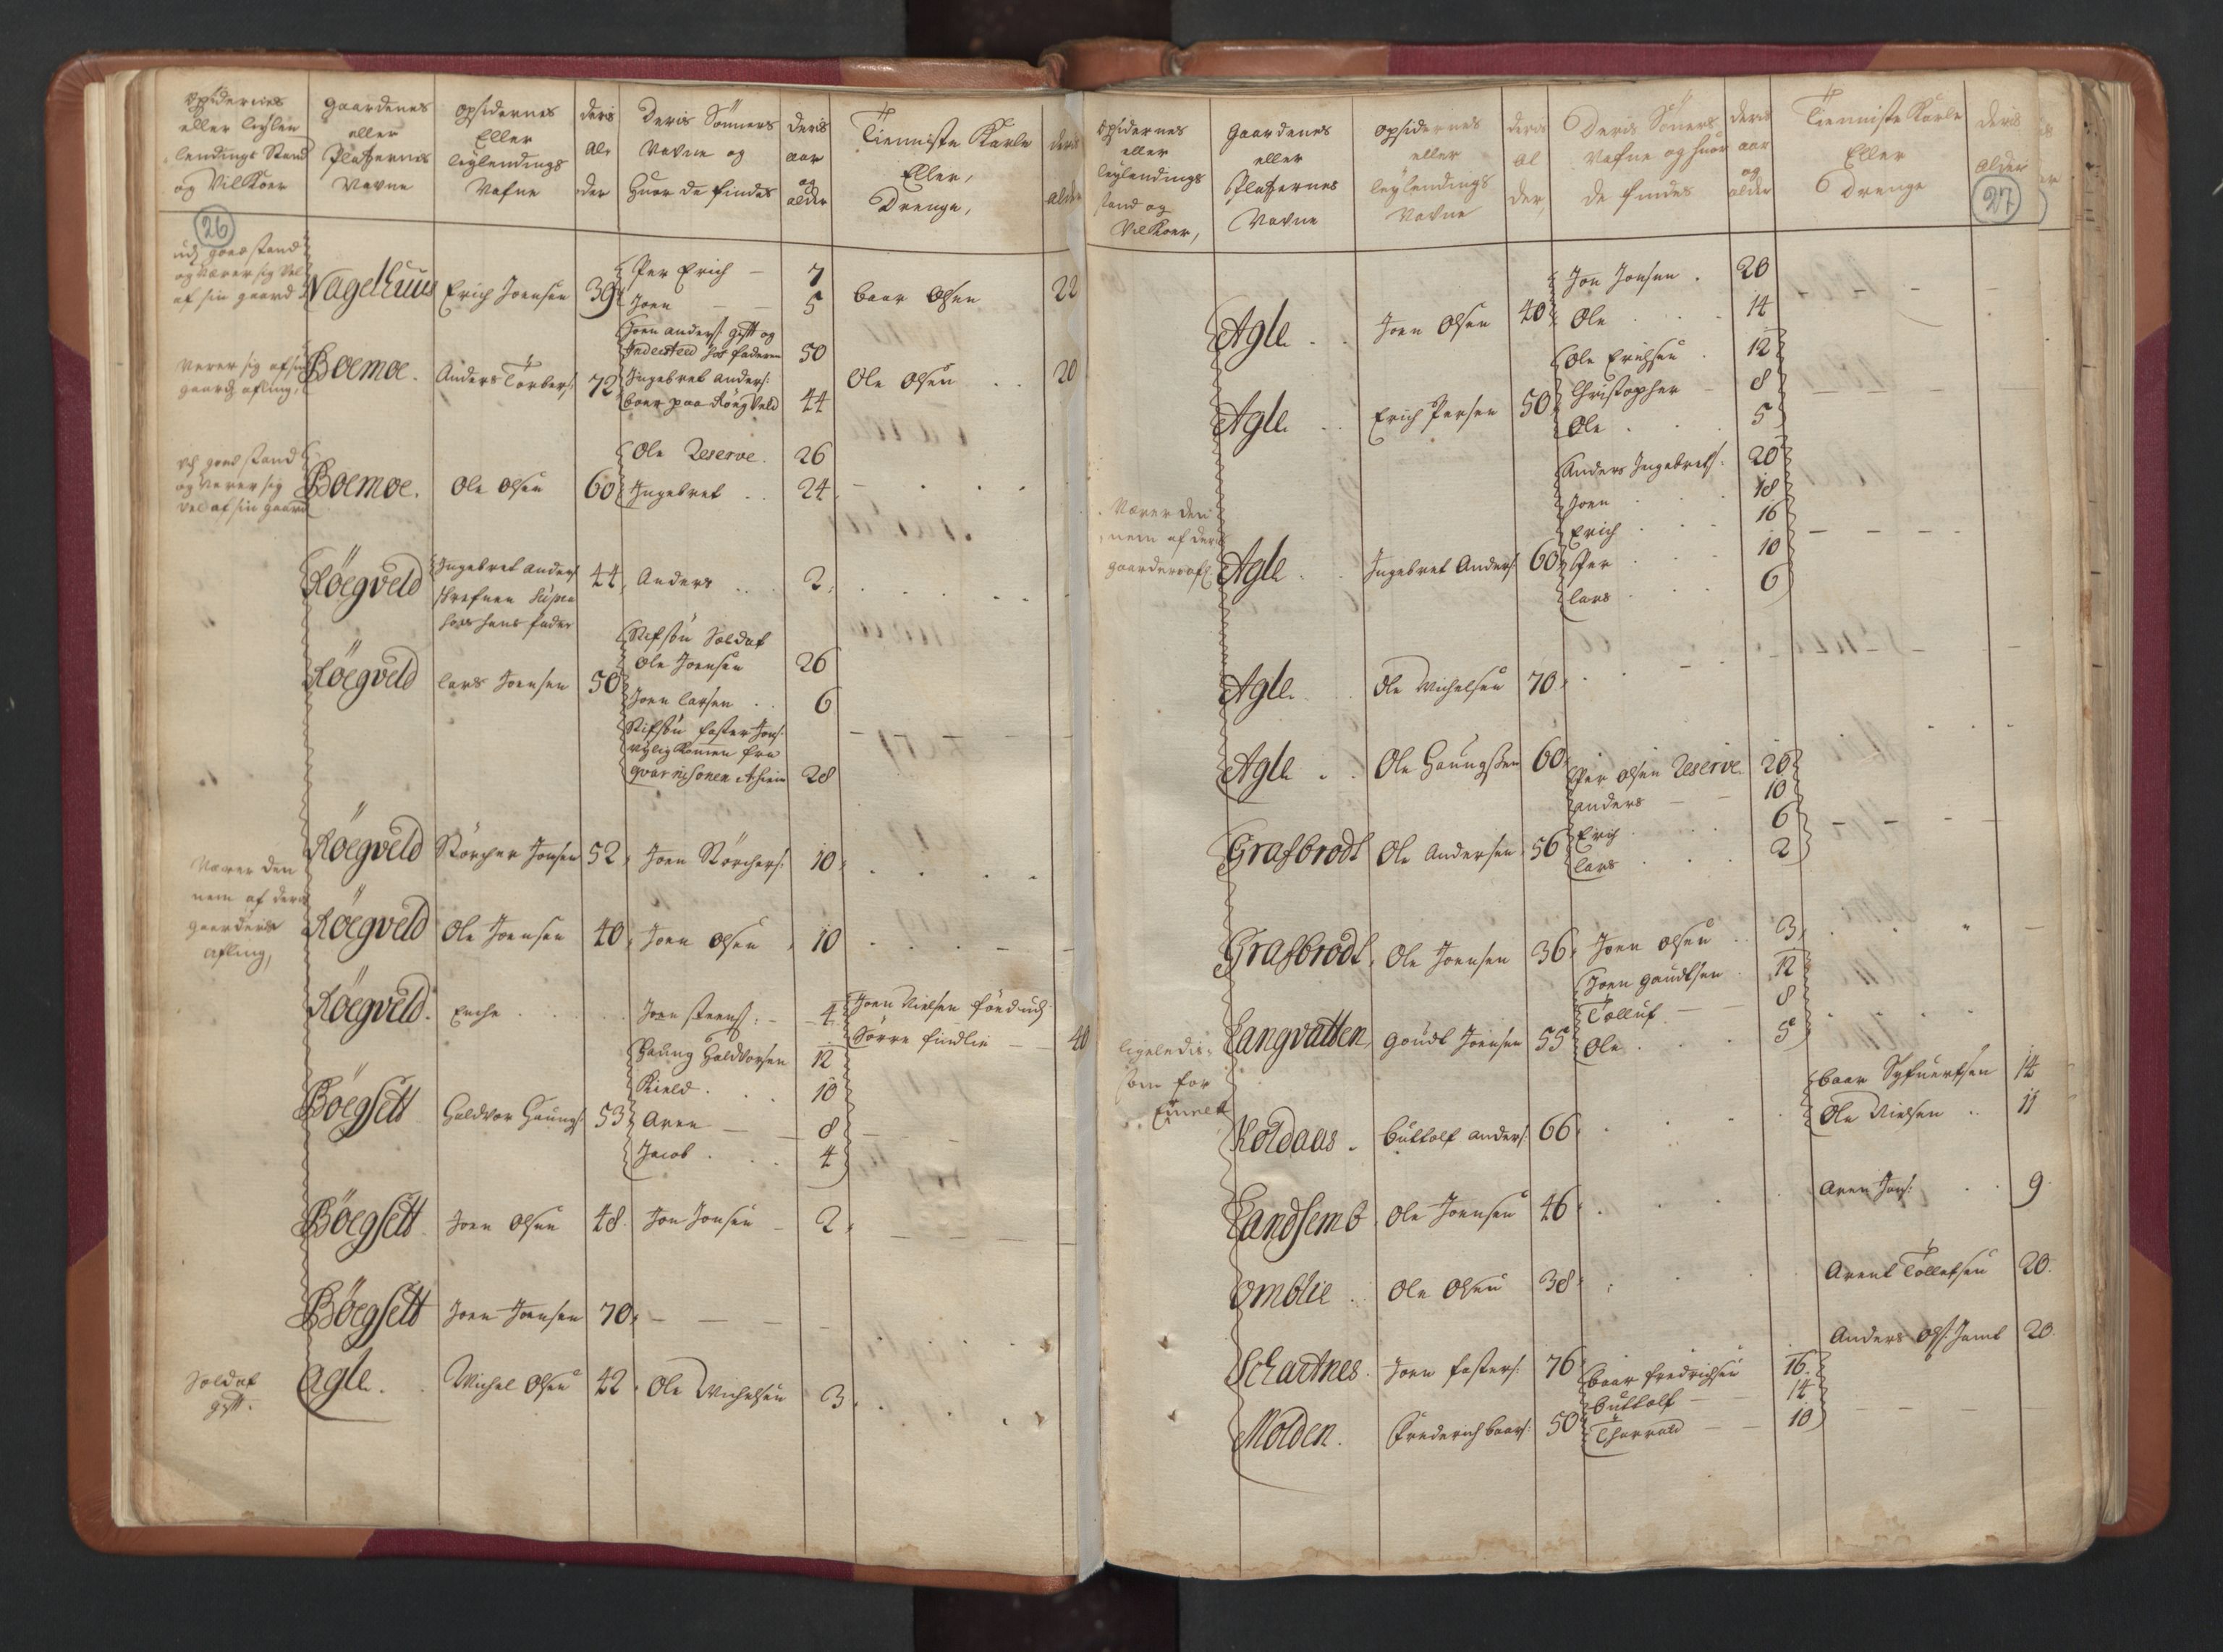 RA, Manntallet 1701, nr. 15: Inderøy fogderi og Namdal fogderi, 1701, s. 26-27